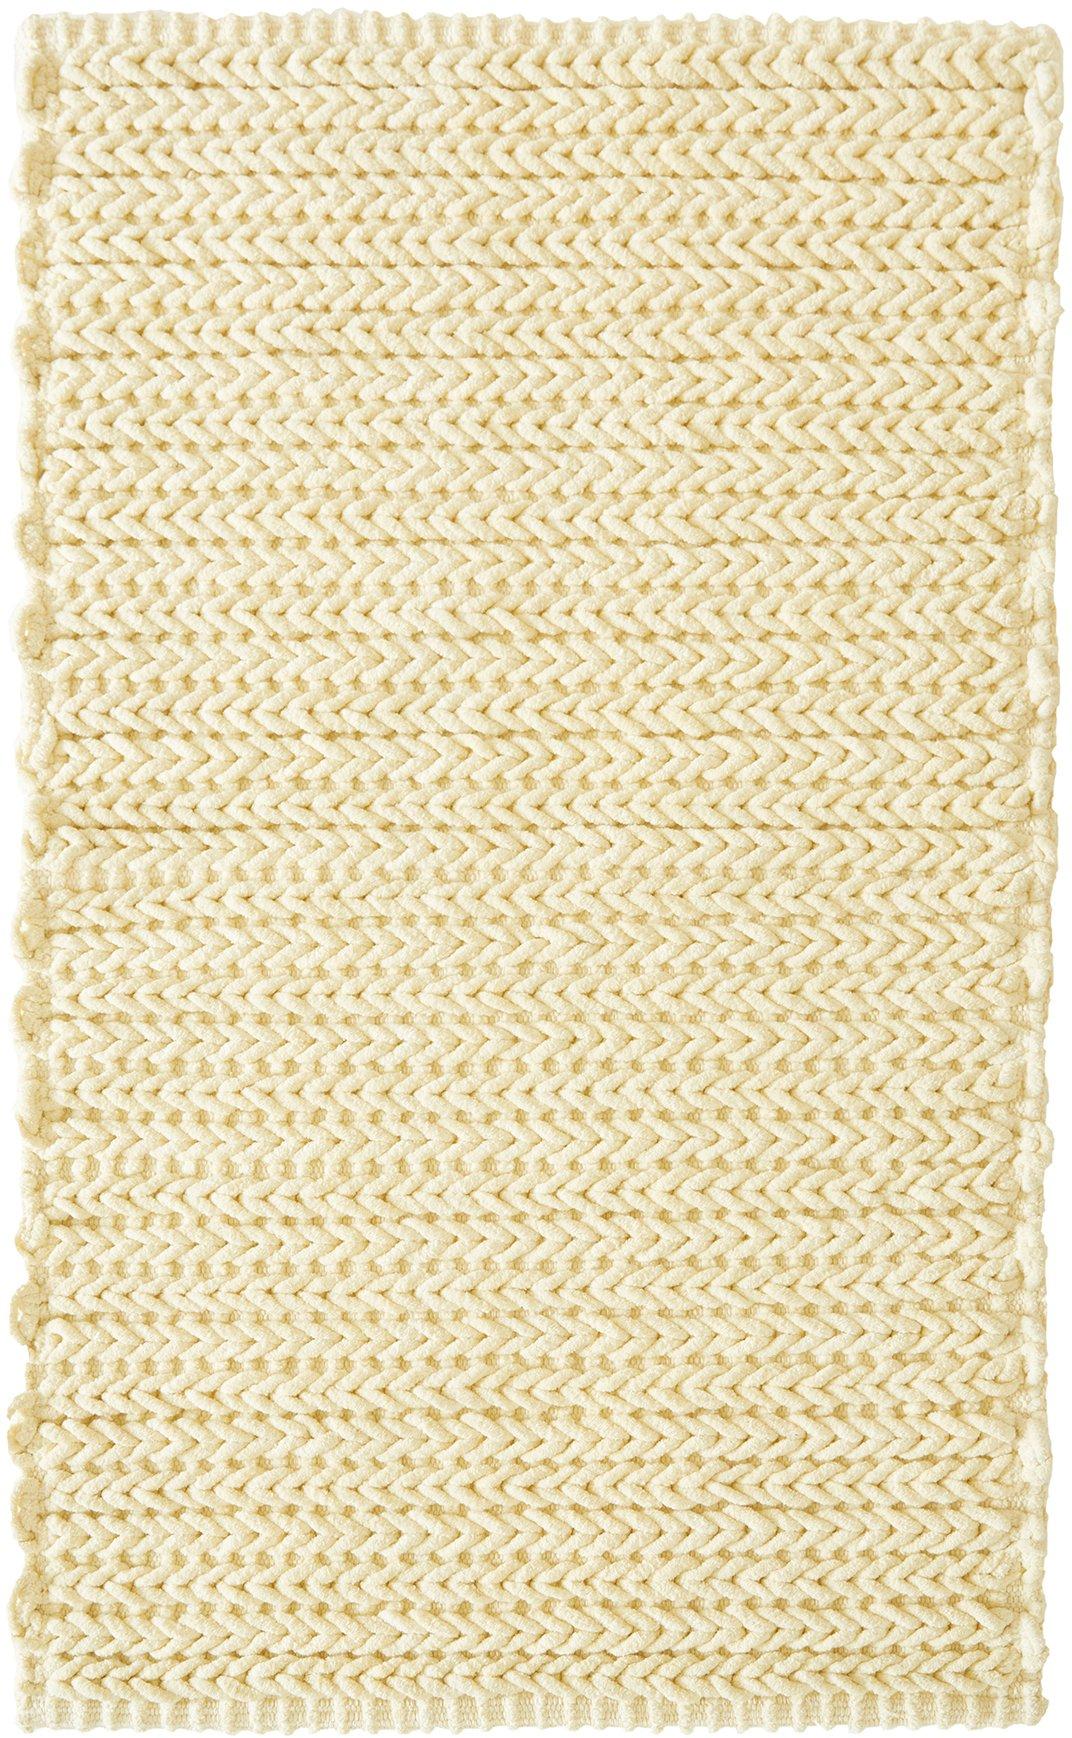 Madison Park Lasso Cotton Chenille Chain Stitch Rug 20x30 / Charcoal